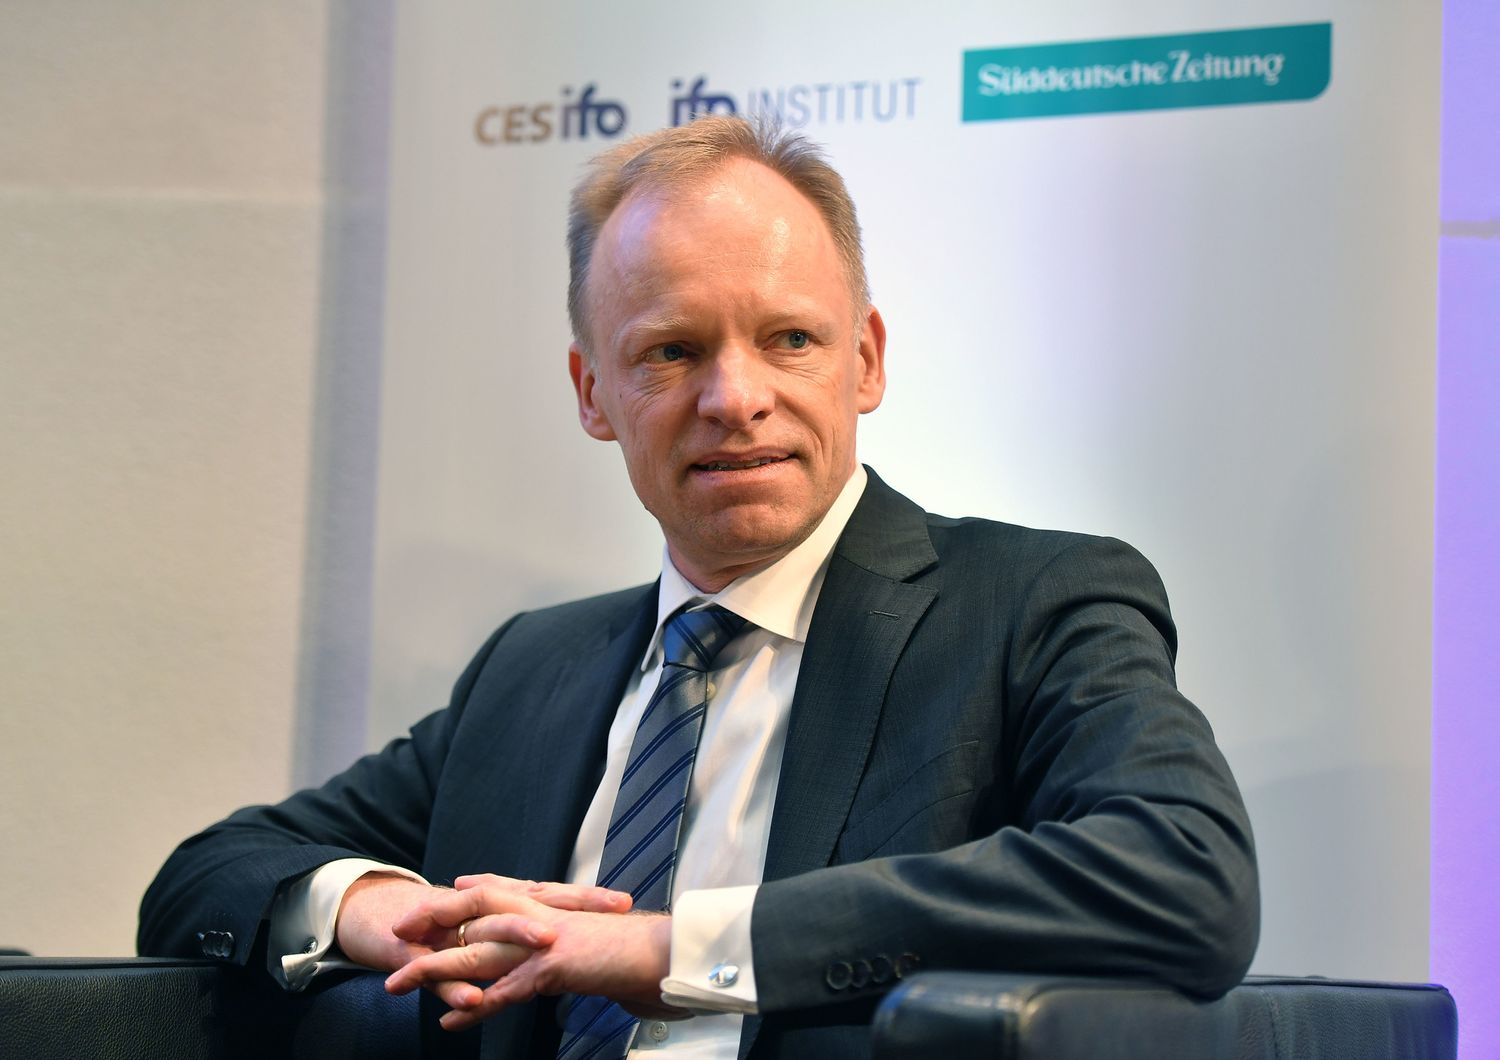 L'economista tedesco Clemens Fuest, presidente dell'Ifo